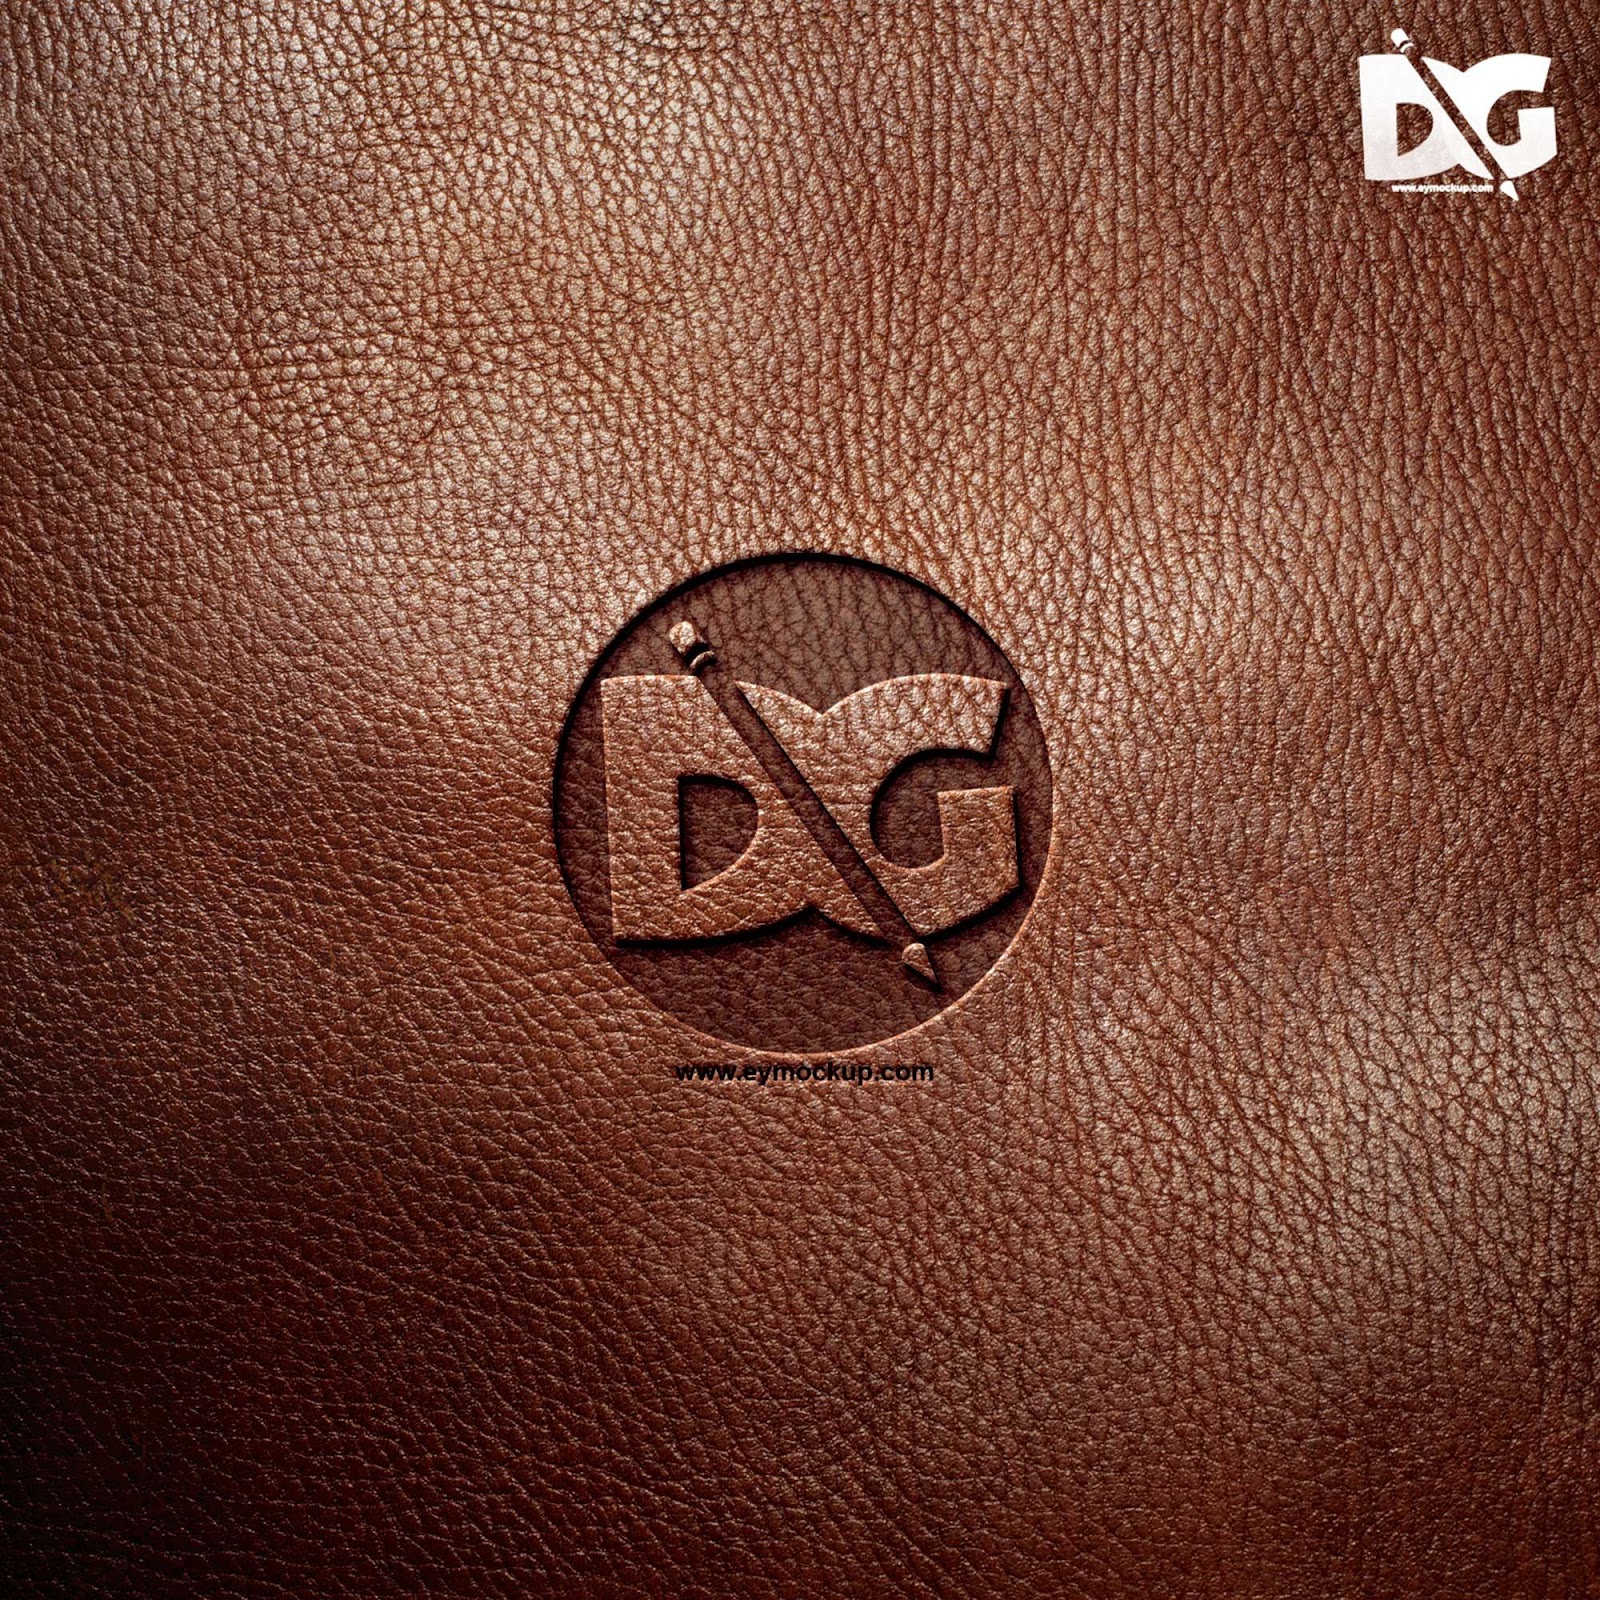 Download 11758+ Leather Bag Mockup Psd Free for Branding